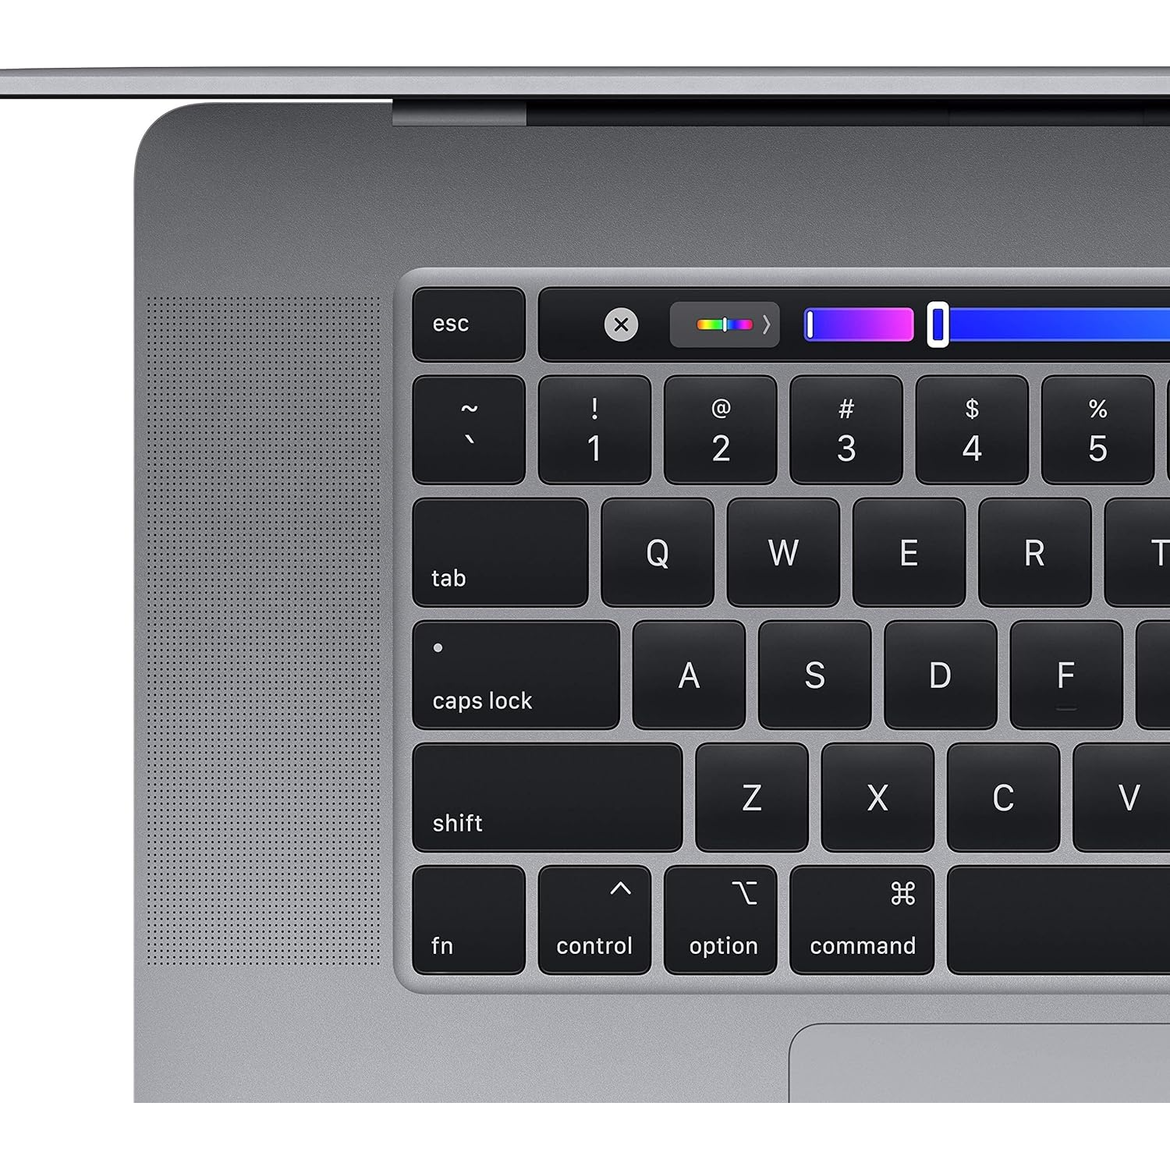 MacBook Pro 16-inch Laptop 2.6GHz 6-Core i7 16GB RAM 512GB SSD - Silver (2019)